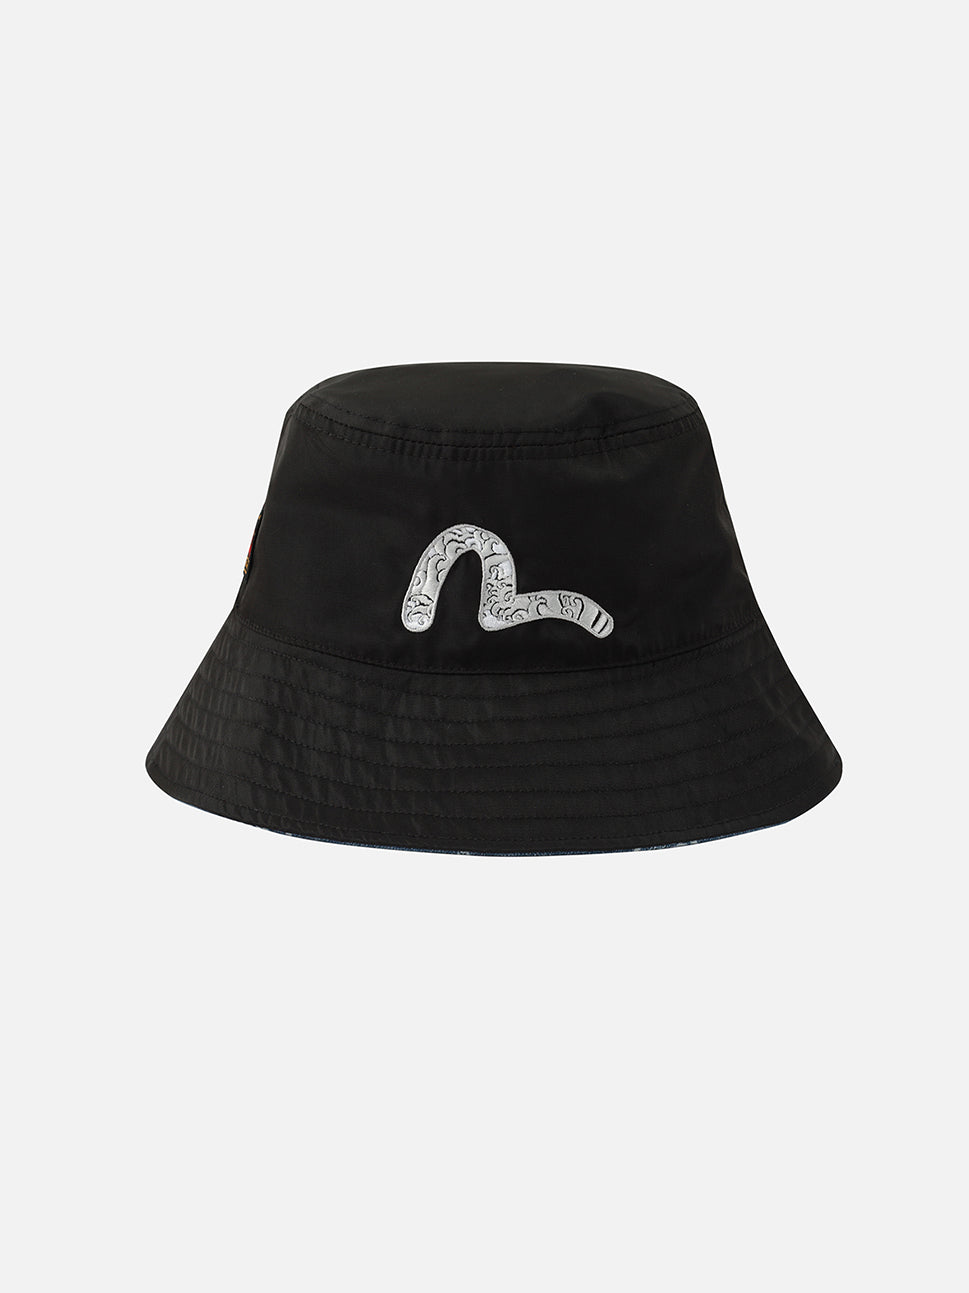 Evisu Black Seagull Embroidery with Kamon Eagle Allover Denim Bucket Hat